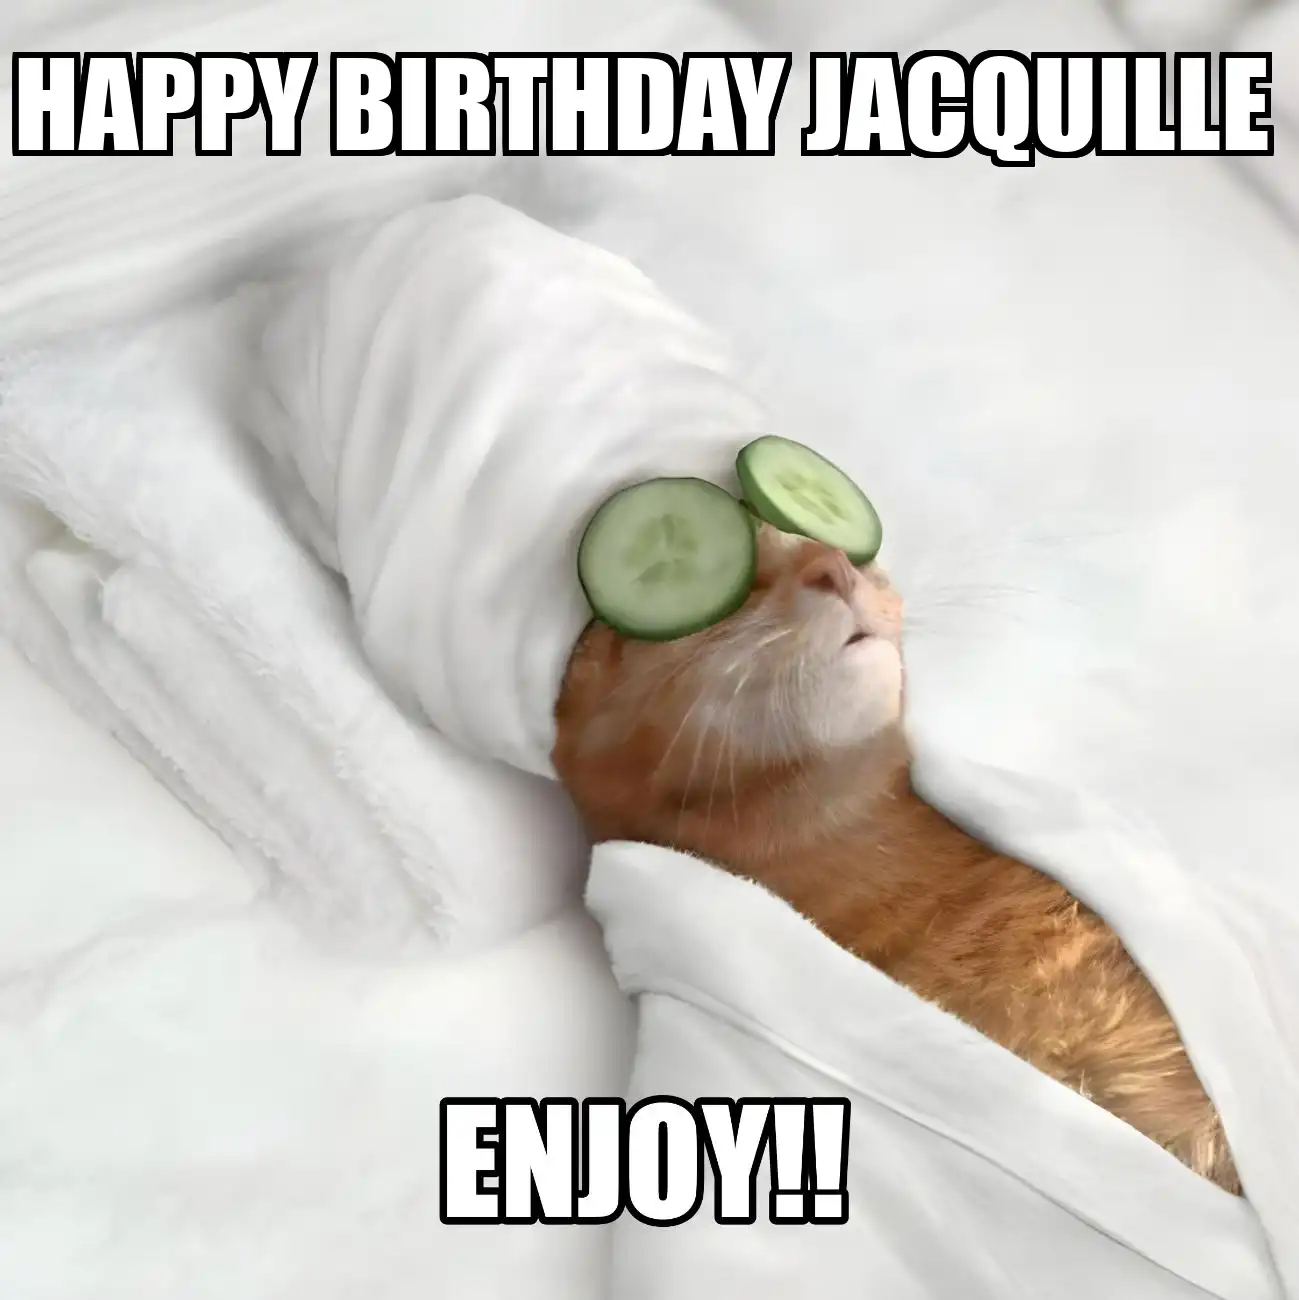 Happy Birthday Jacquille Enjoy Cat Meme